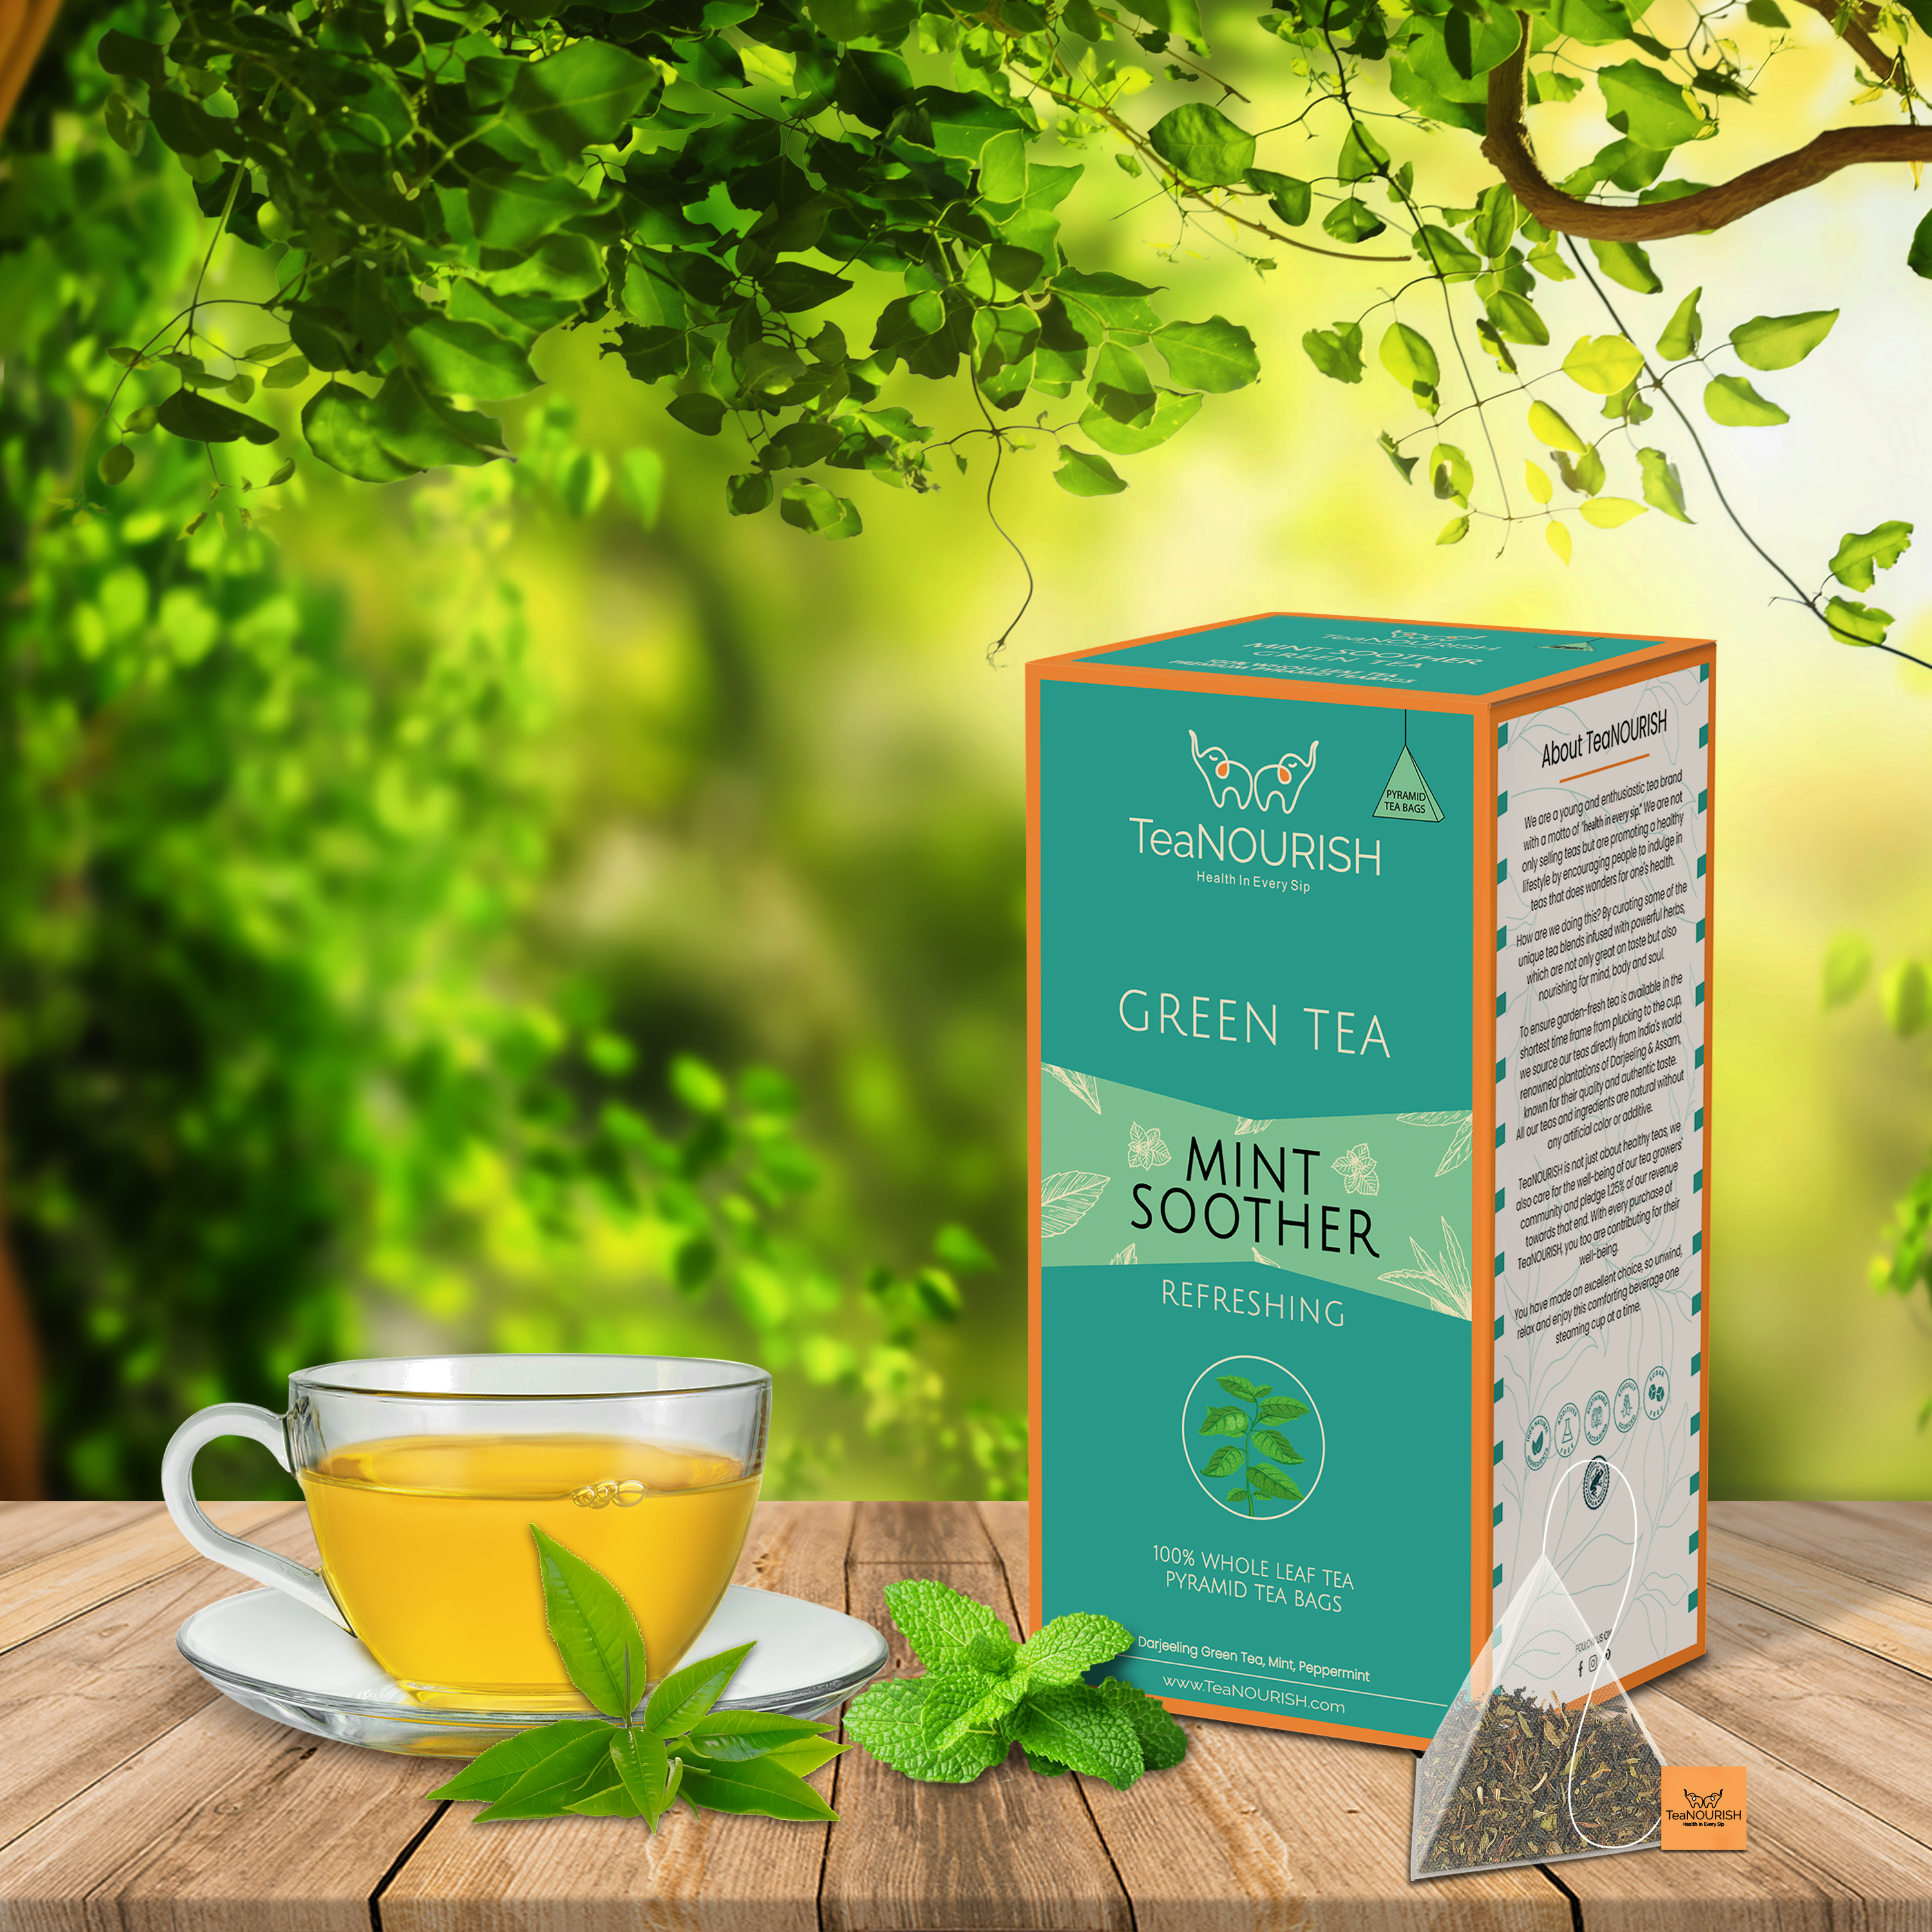 Mint Soother Green Tea - 20 Tea Bags